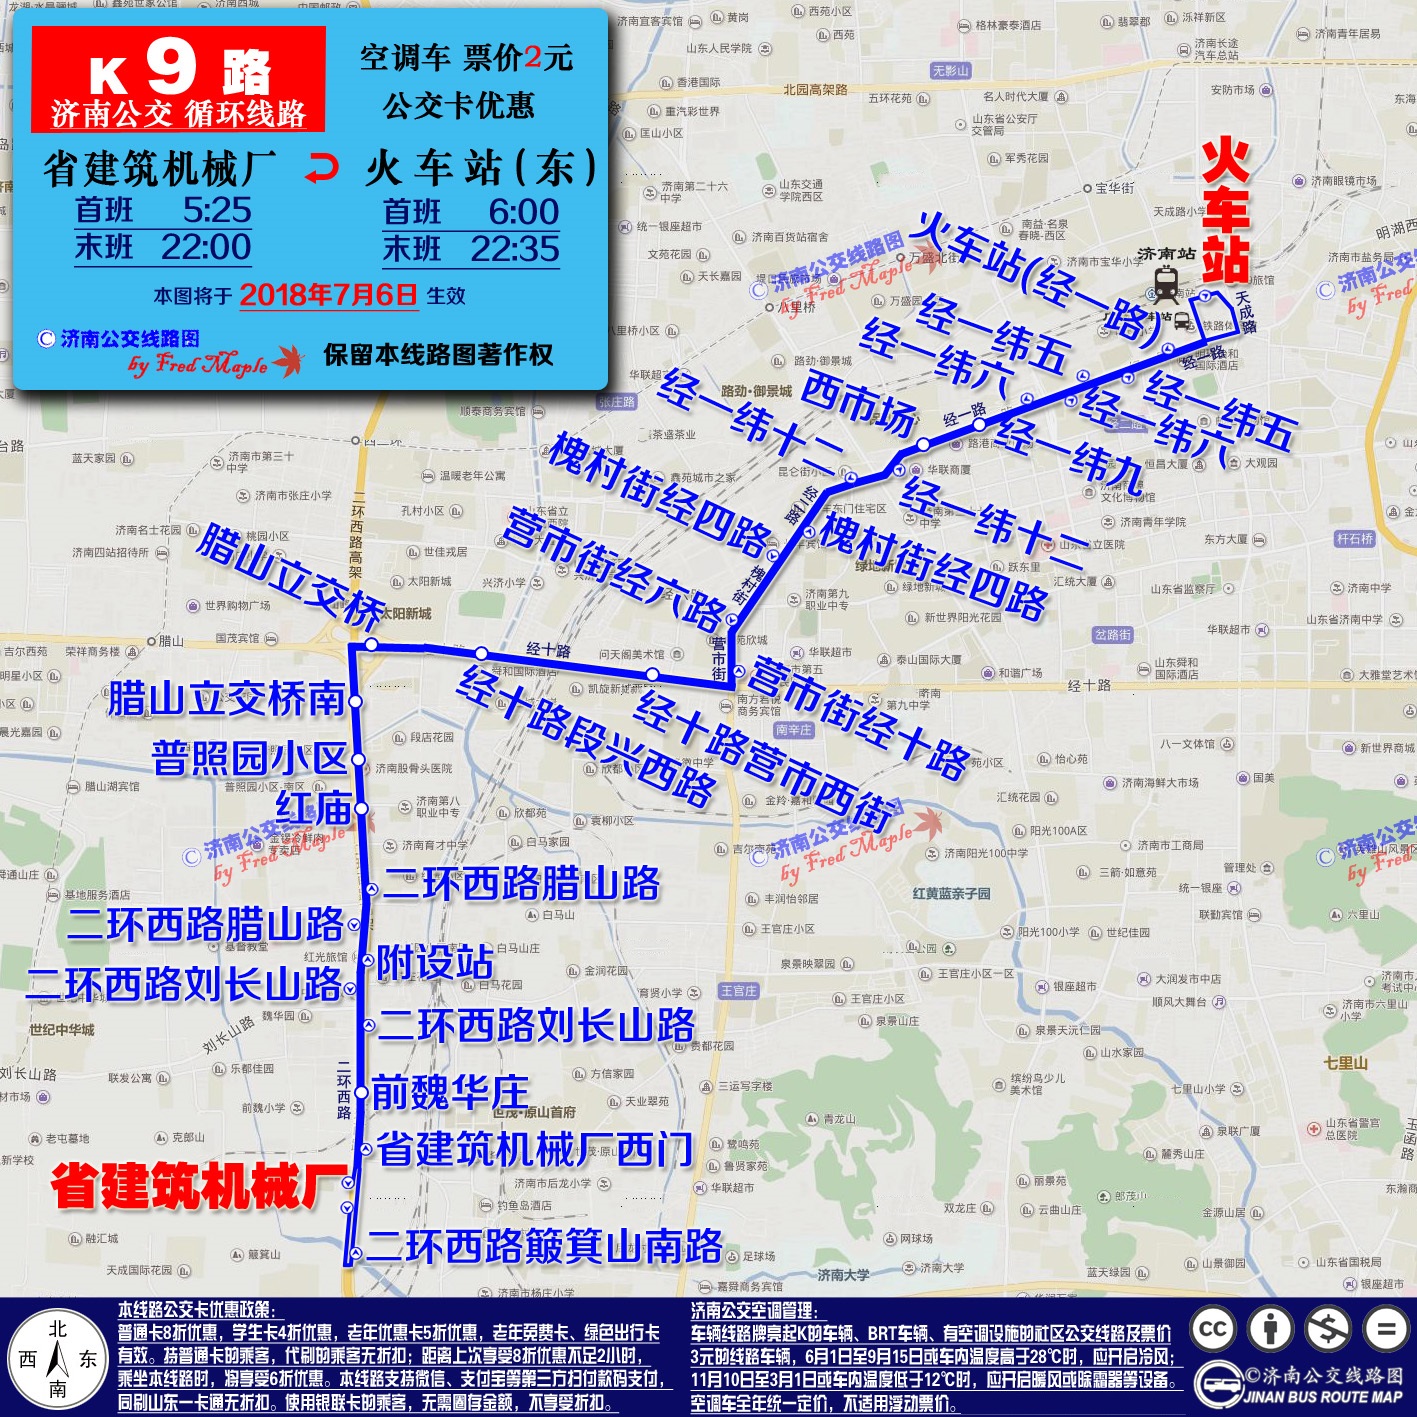 K9路線路圖